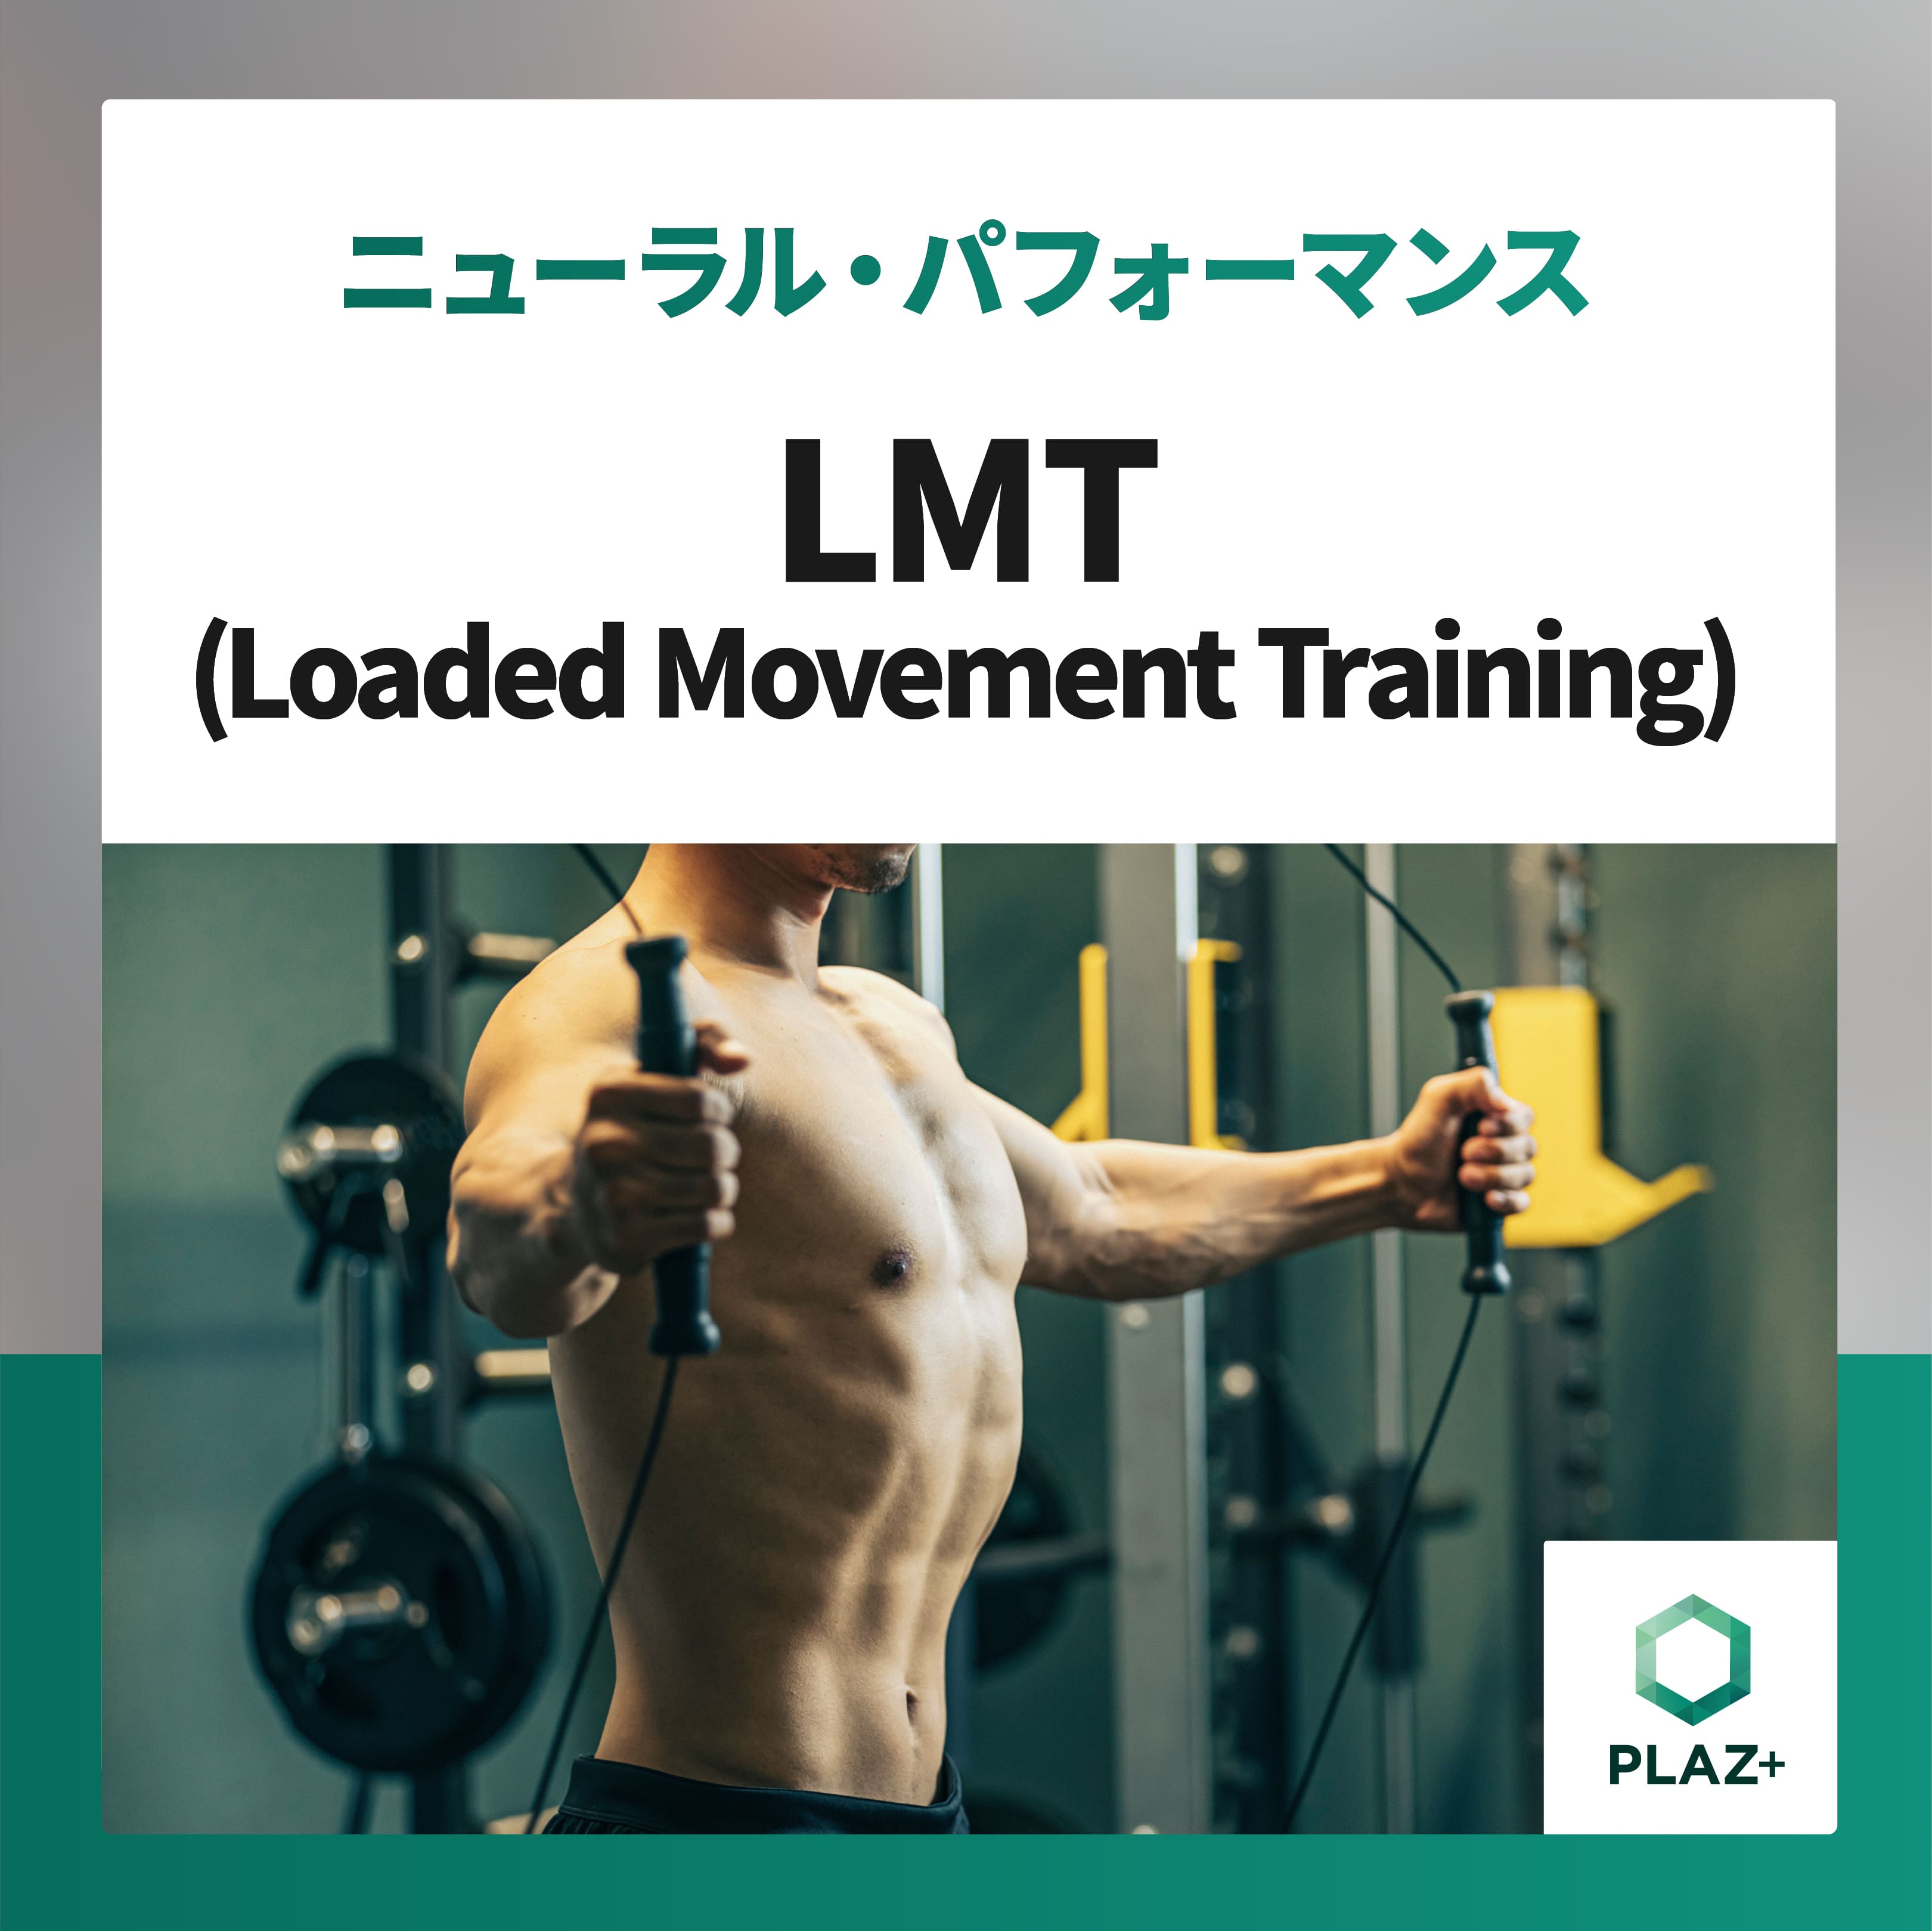 Loaded Movement Training（LMT）